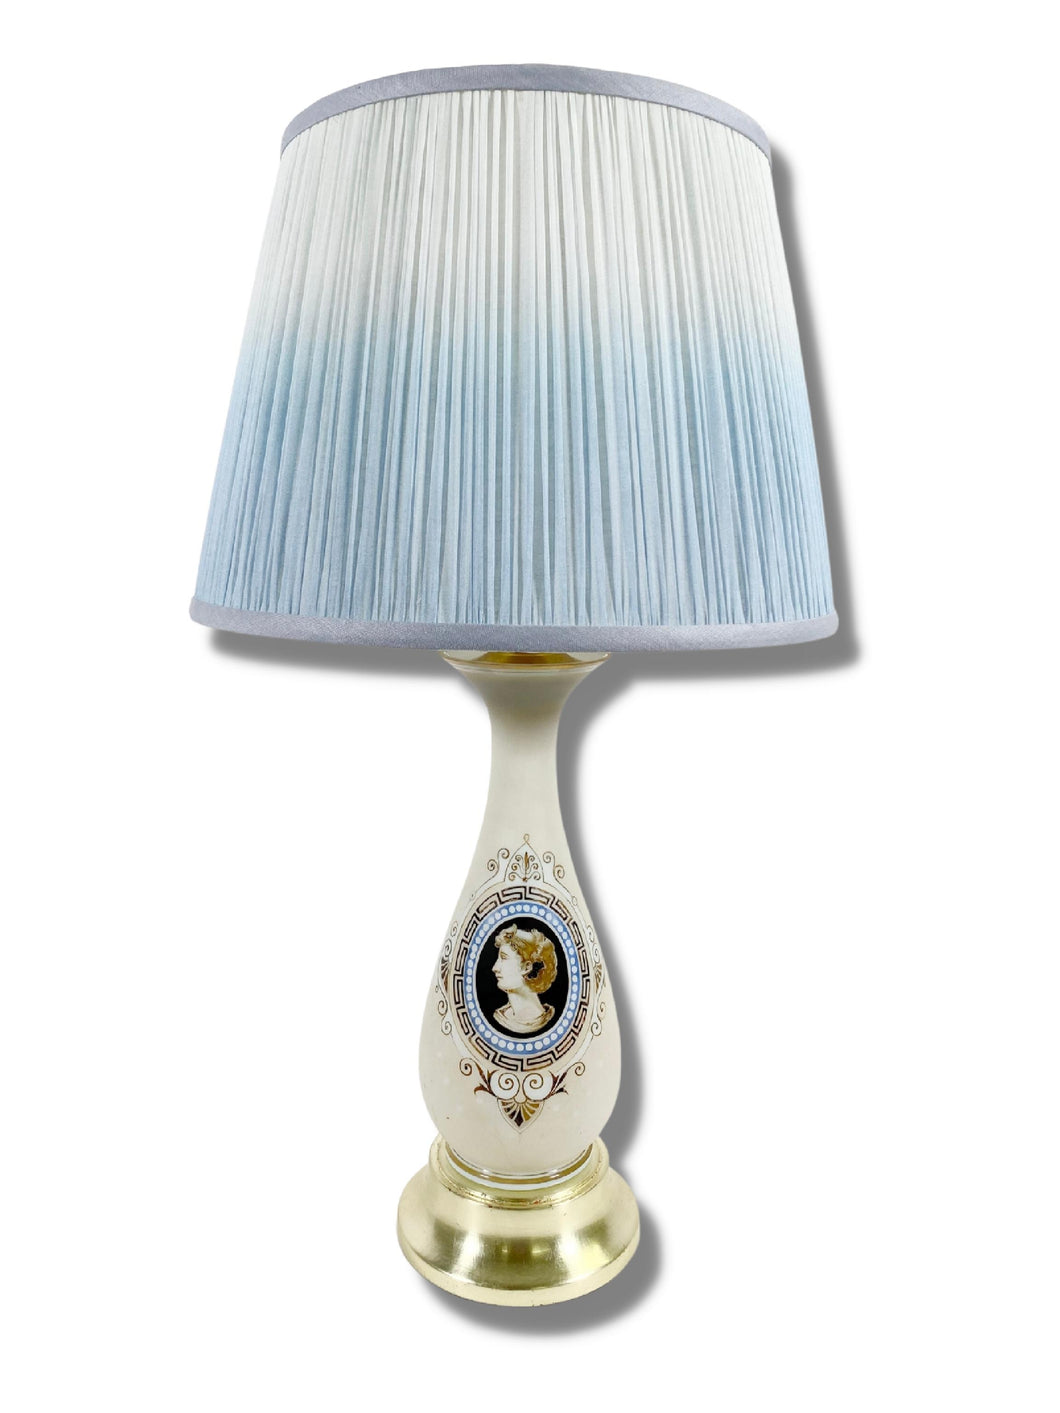 Bristol Lamp with Matching Shade